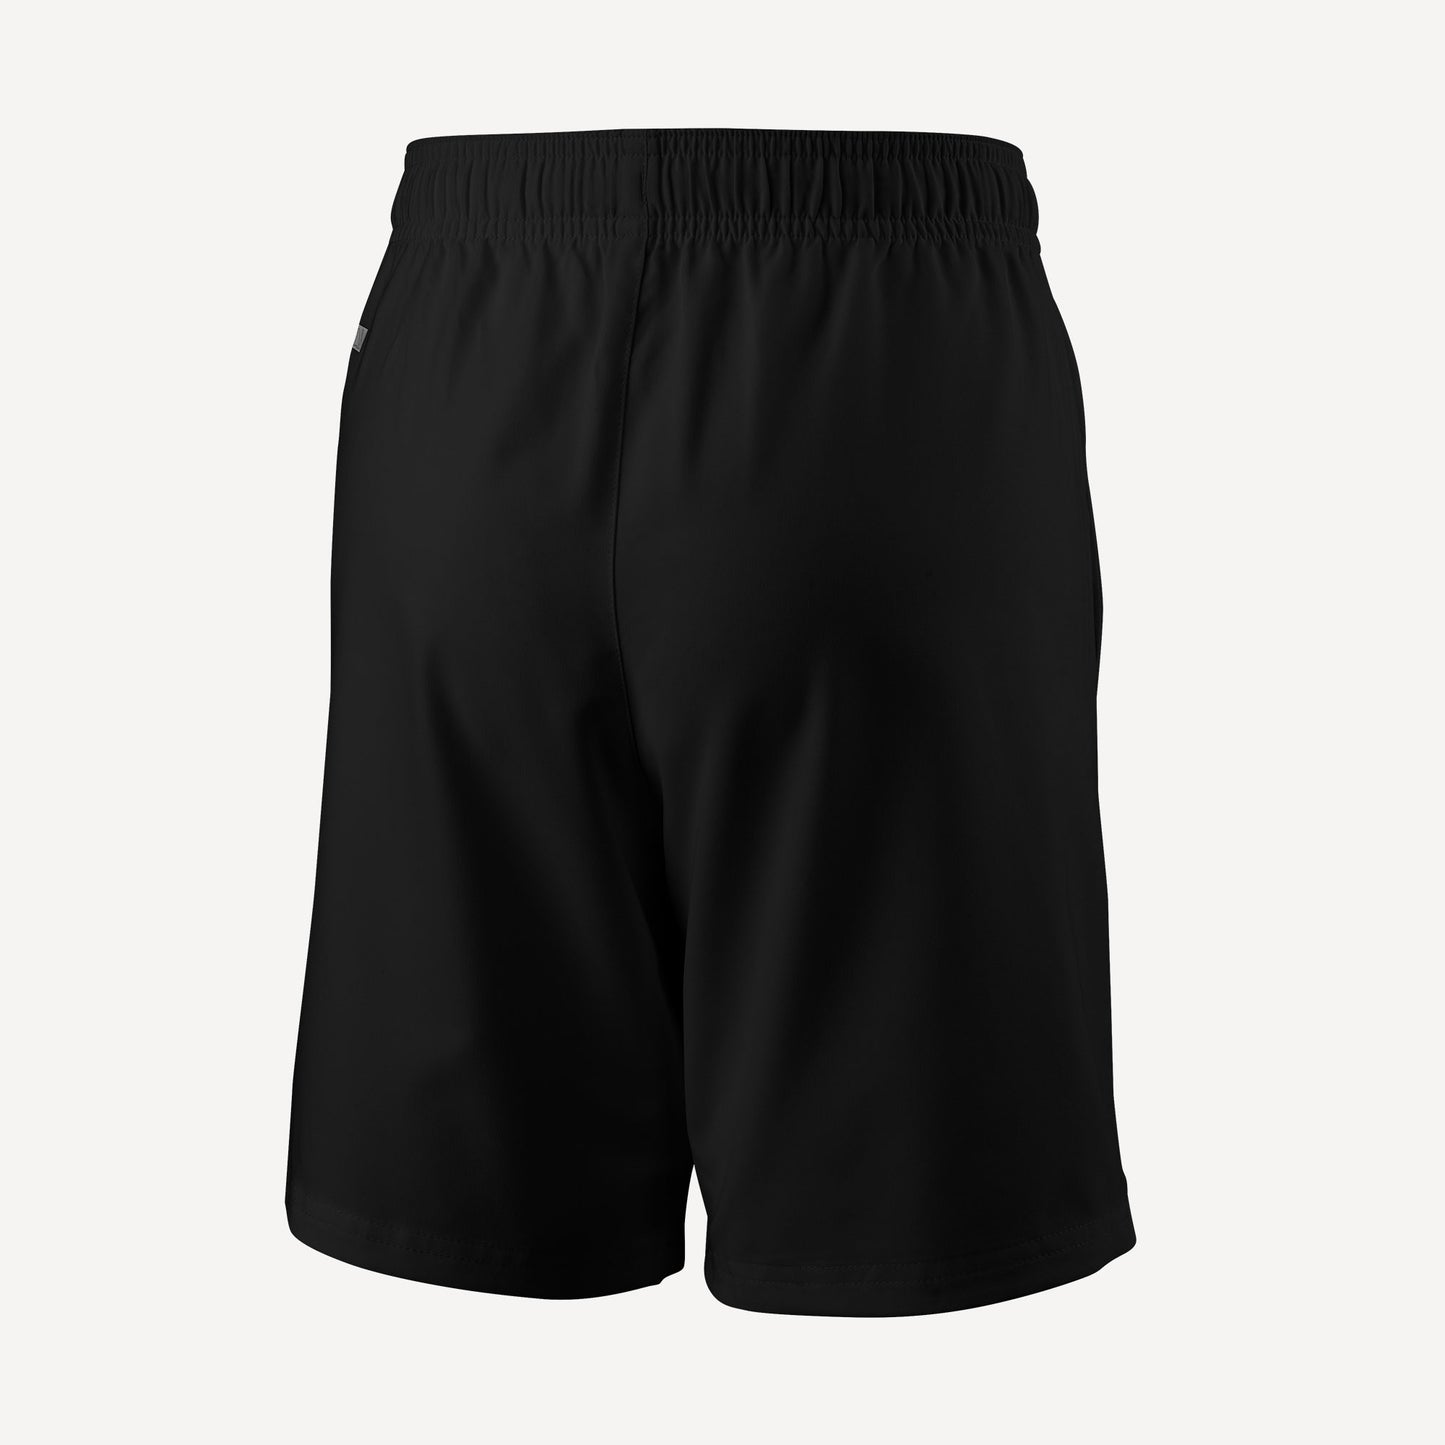 Wilson Team 2 Boys' 7-Inch Tennis Shorts Black (2)